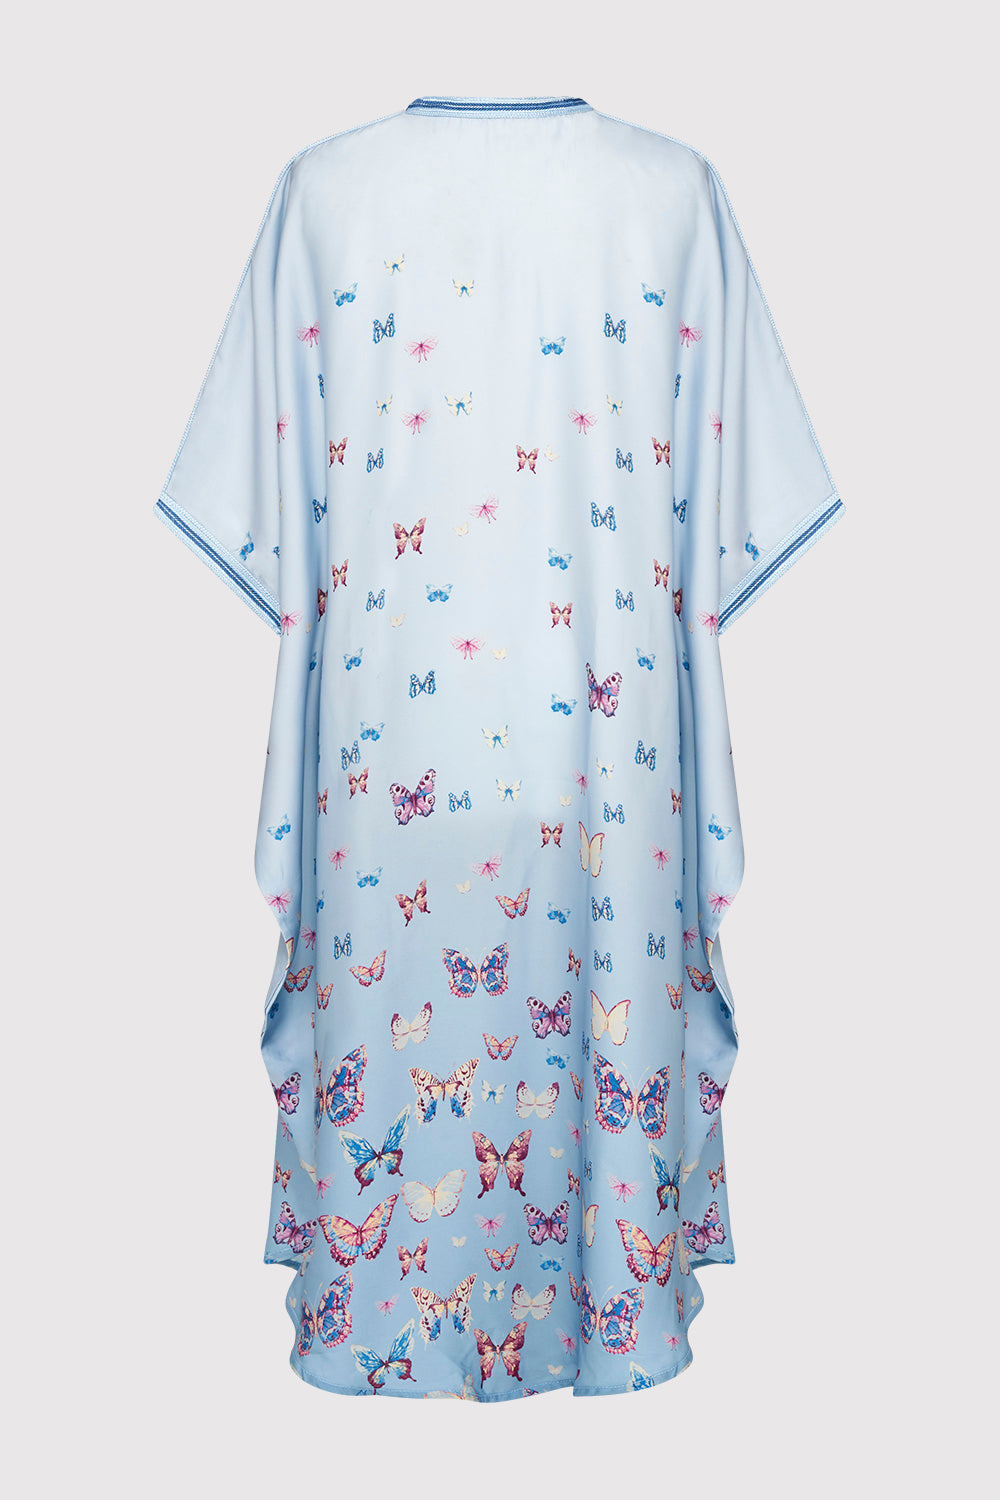 Gandoura Dara Girl's Short Sleeve Collarless Butterfly Print Maxi Dress in Sky Blue (2-12yrs)